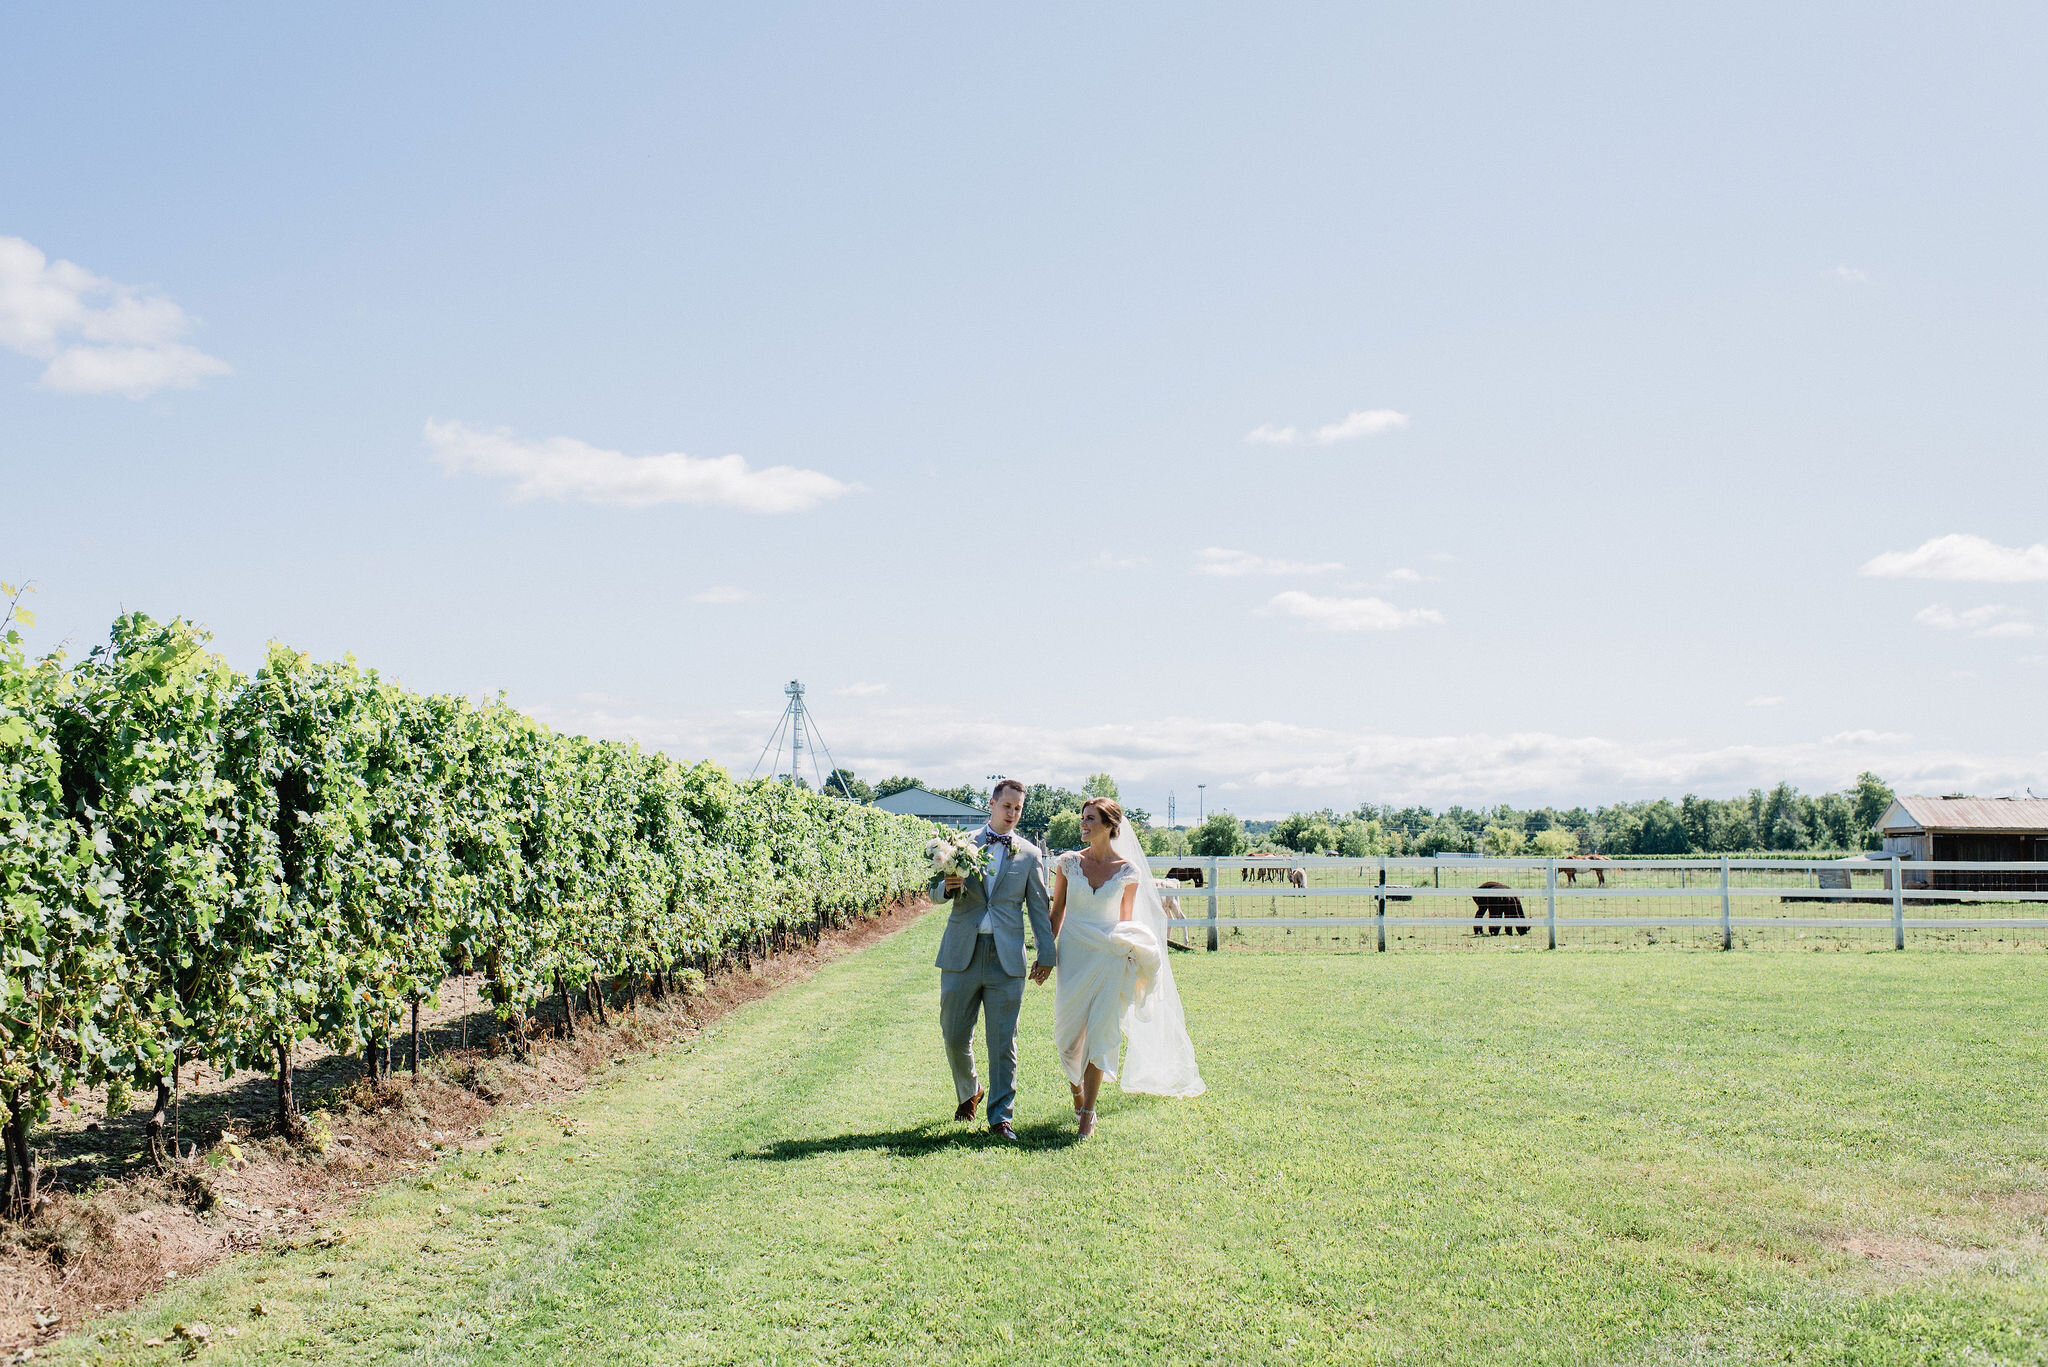 Honsberger-Estate-Wedding-Summer-Winery-Vineyard-Bride-Niagara-on-the-Lake-photos-by-Jacqueline-James-Photography-0040.JPG